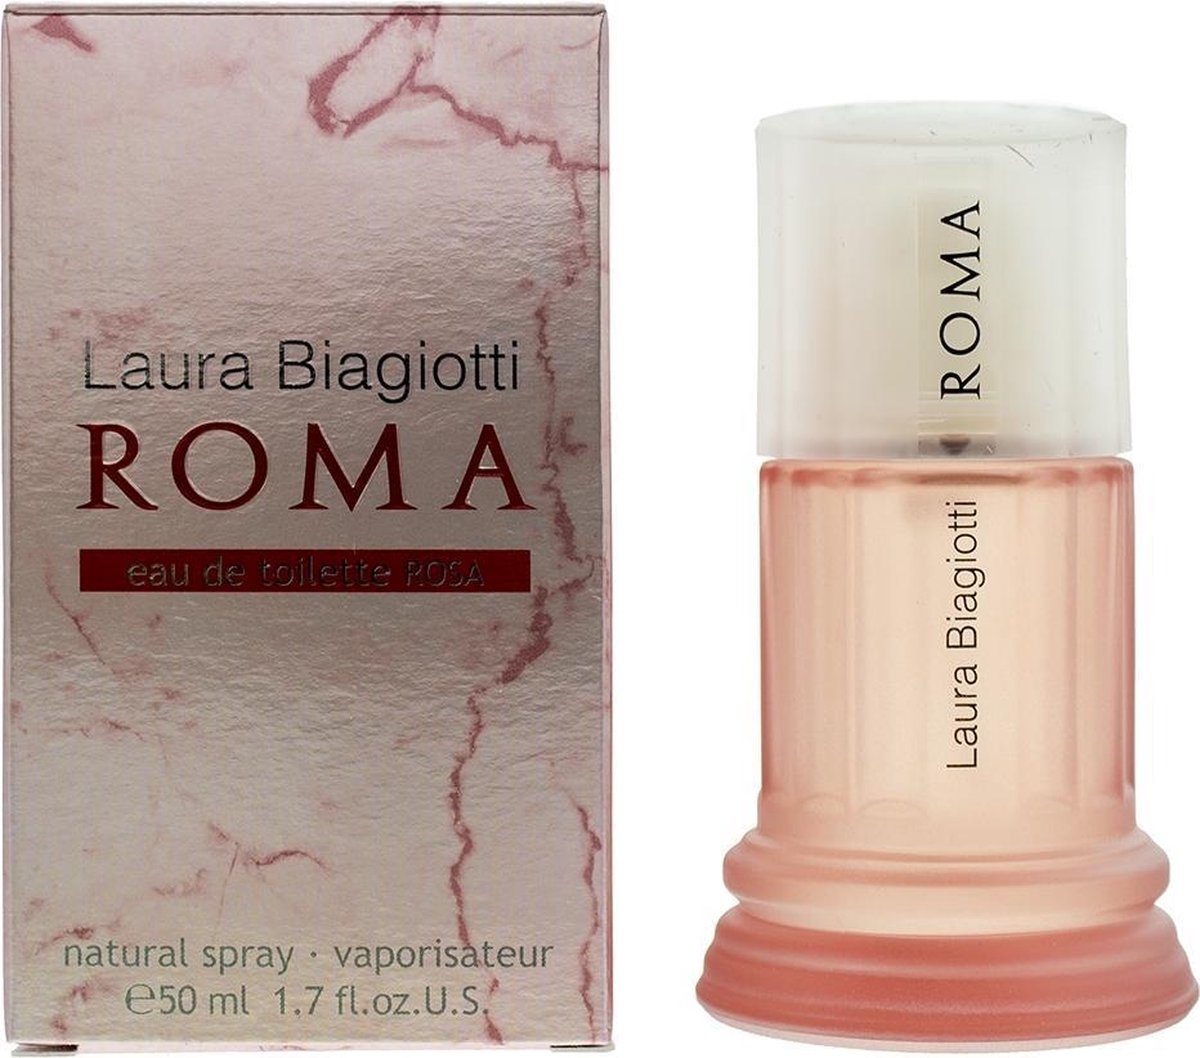 Laura Biagiotti Roma Rosa - 50ml - Eau de toilette - Packaging damaged